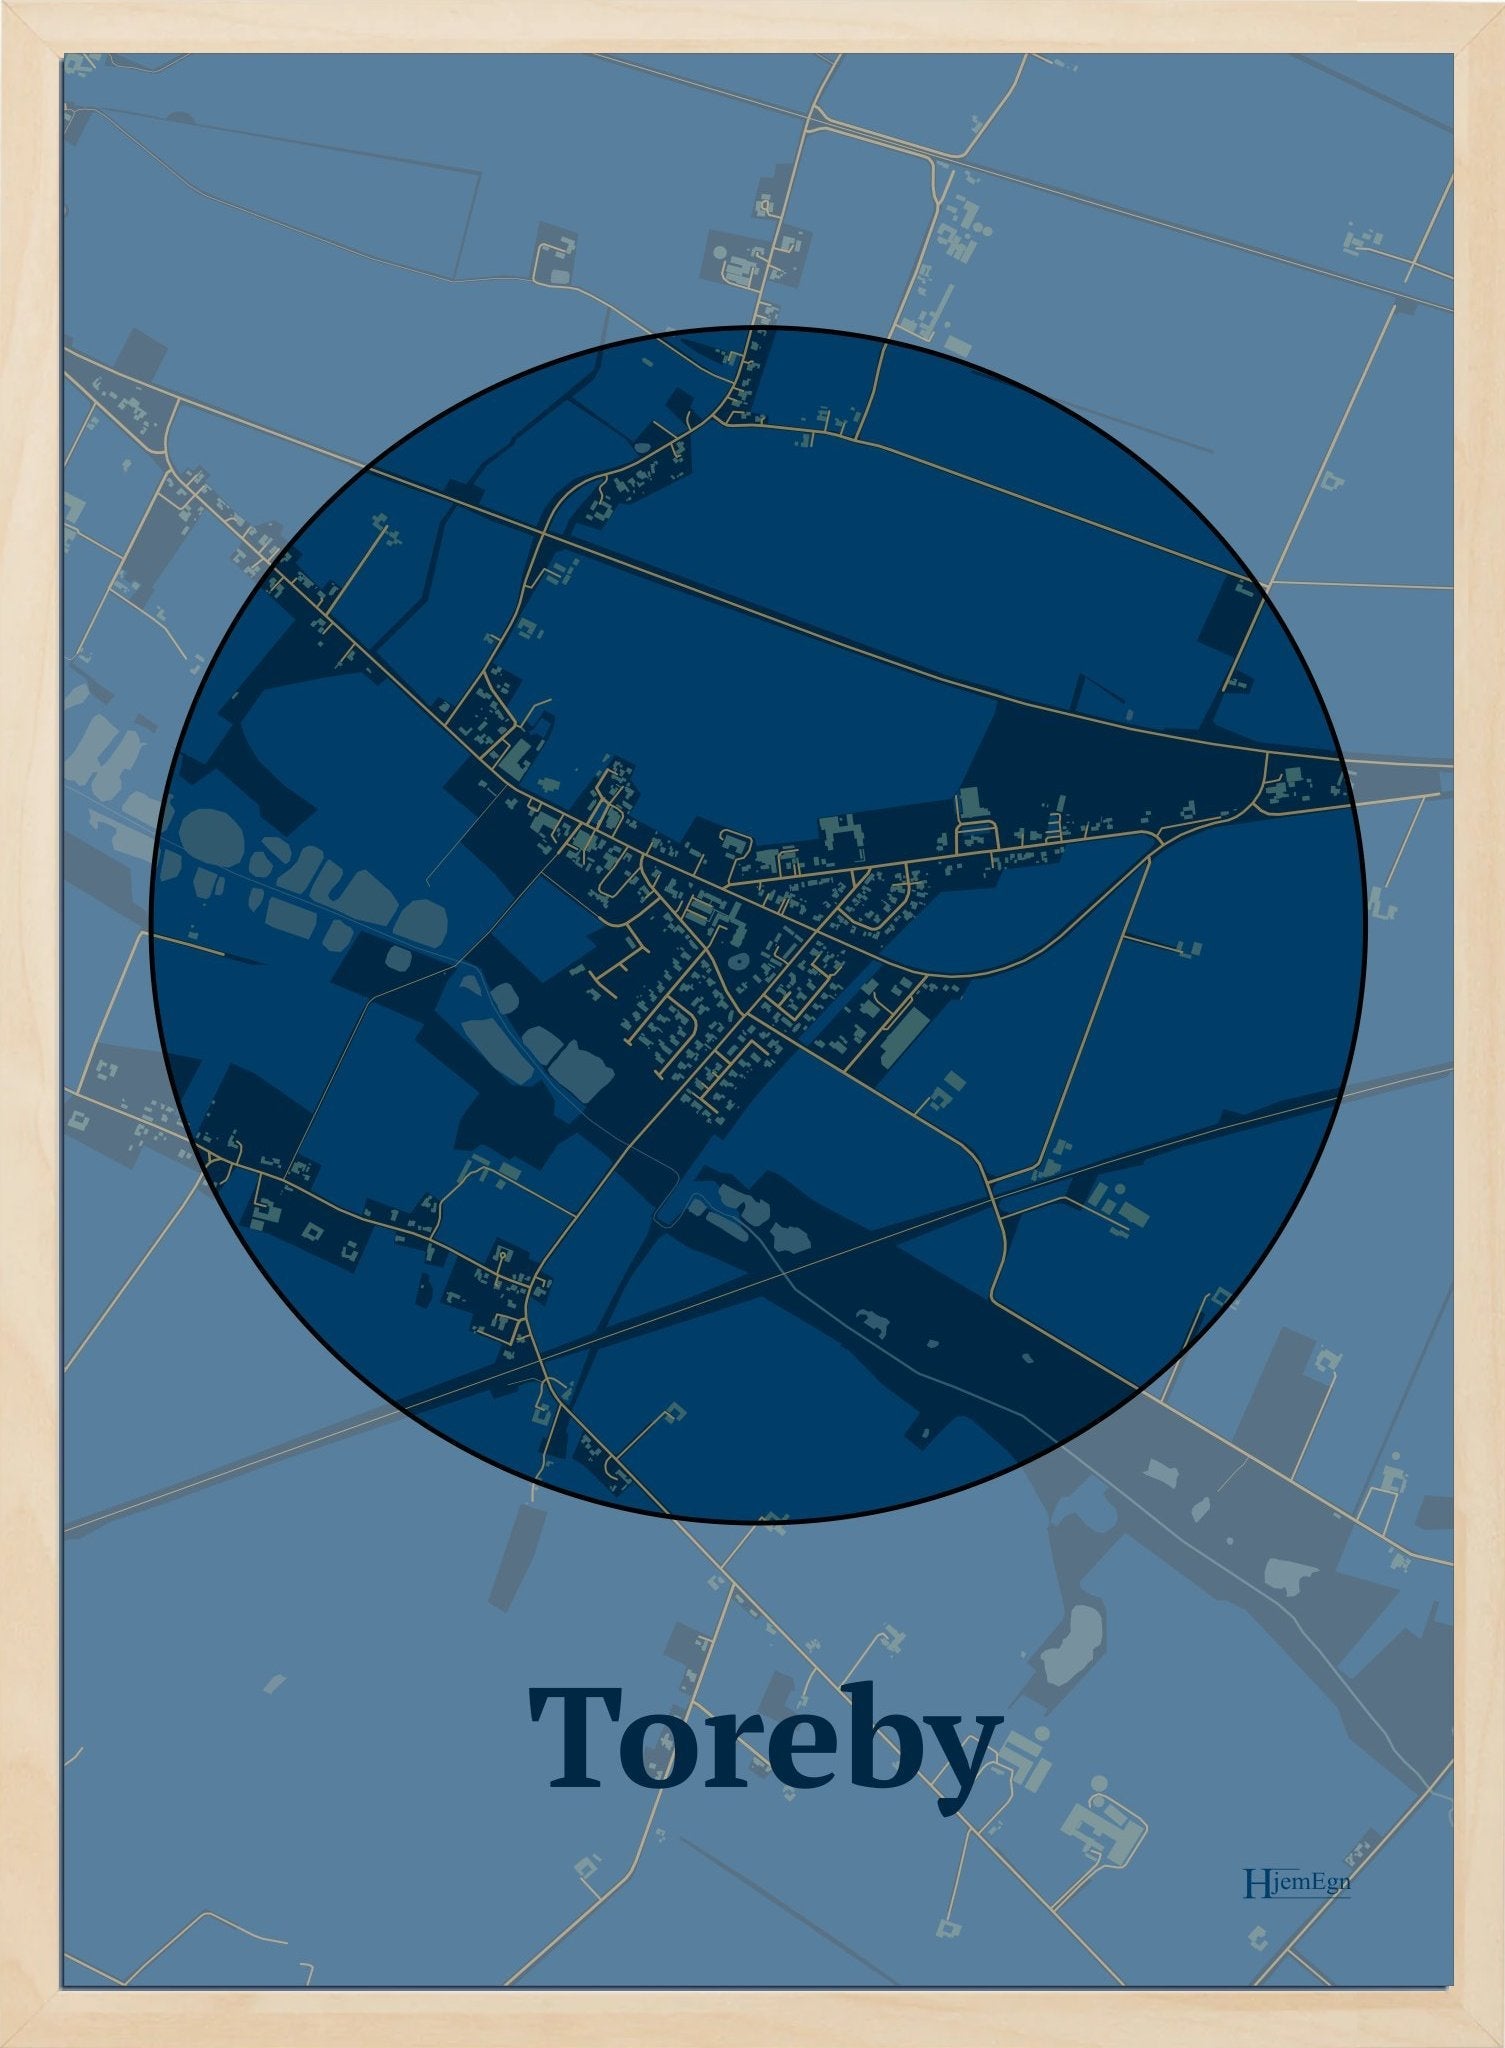 Toreby plakat i farve mørk blå og HjemEgn.dk design centrum. Design bykort for Toreby